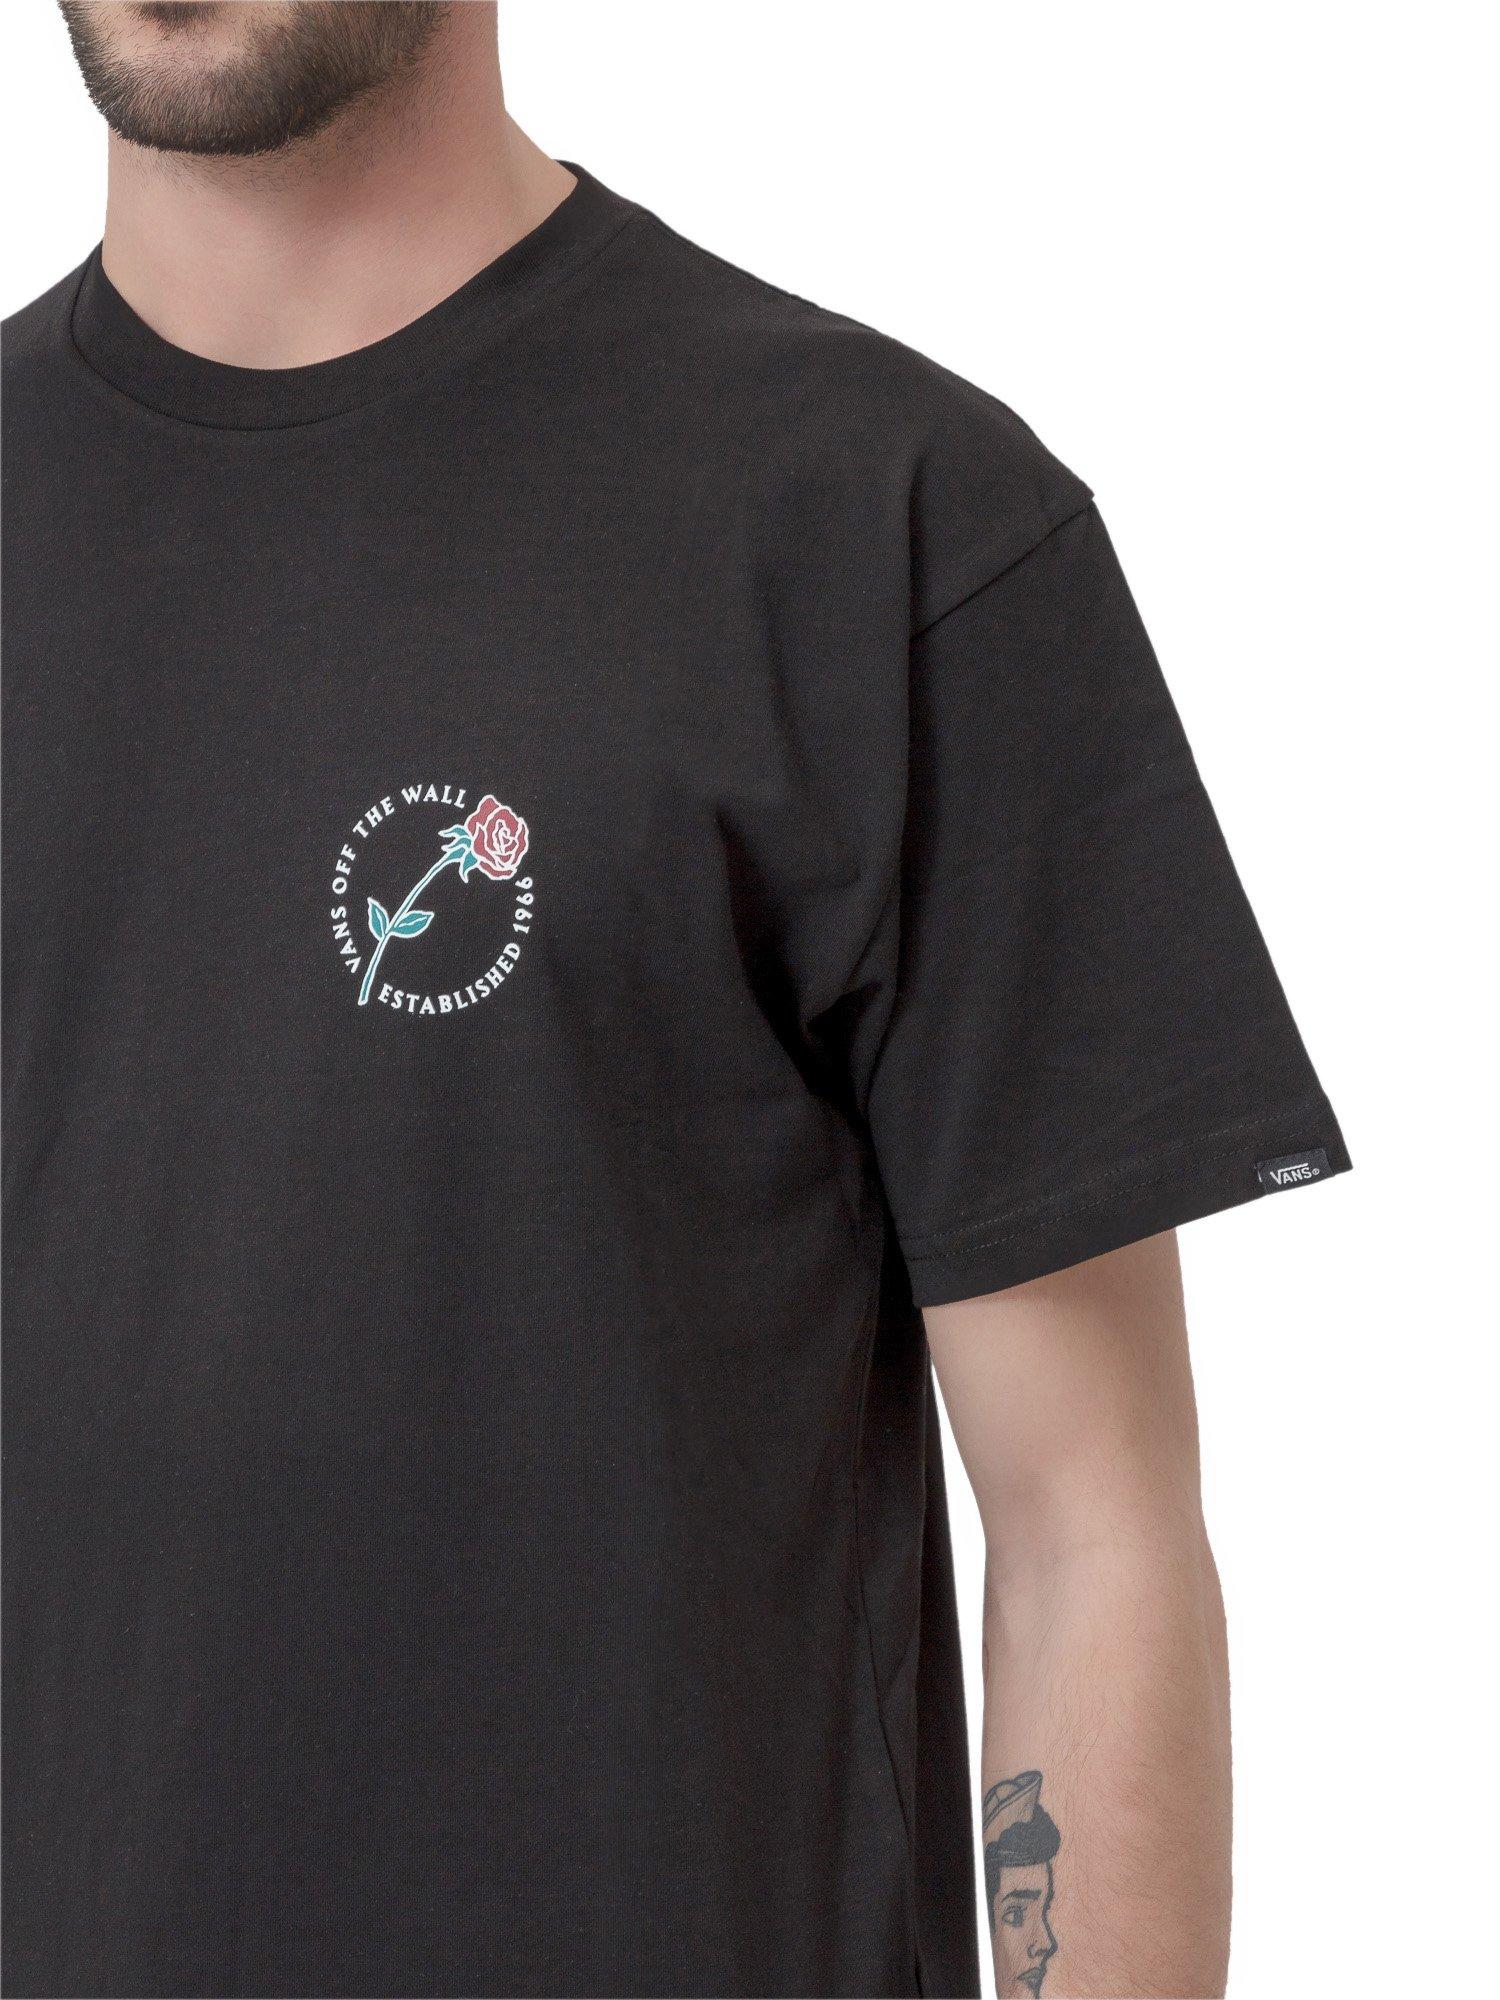 Vans Cotton Coming Up Roses Skull Print T-shirt in Black for Men | Lyst